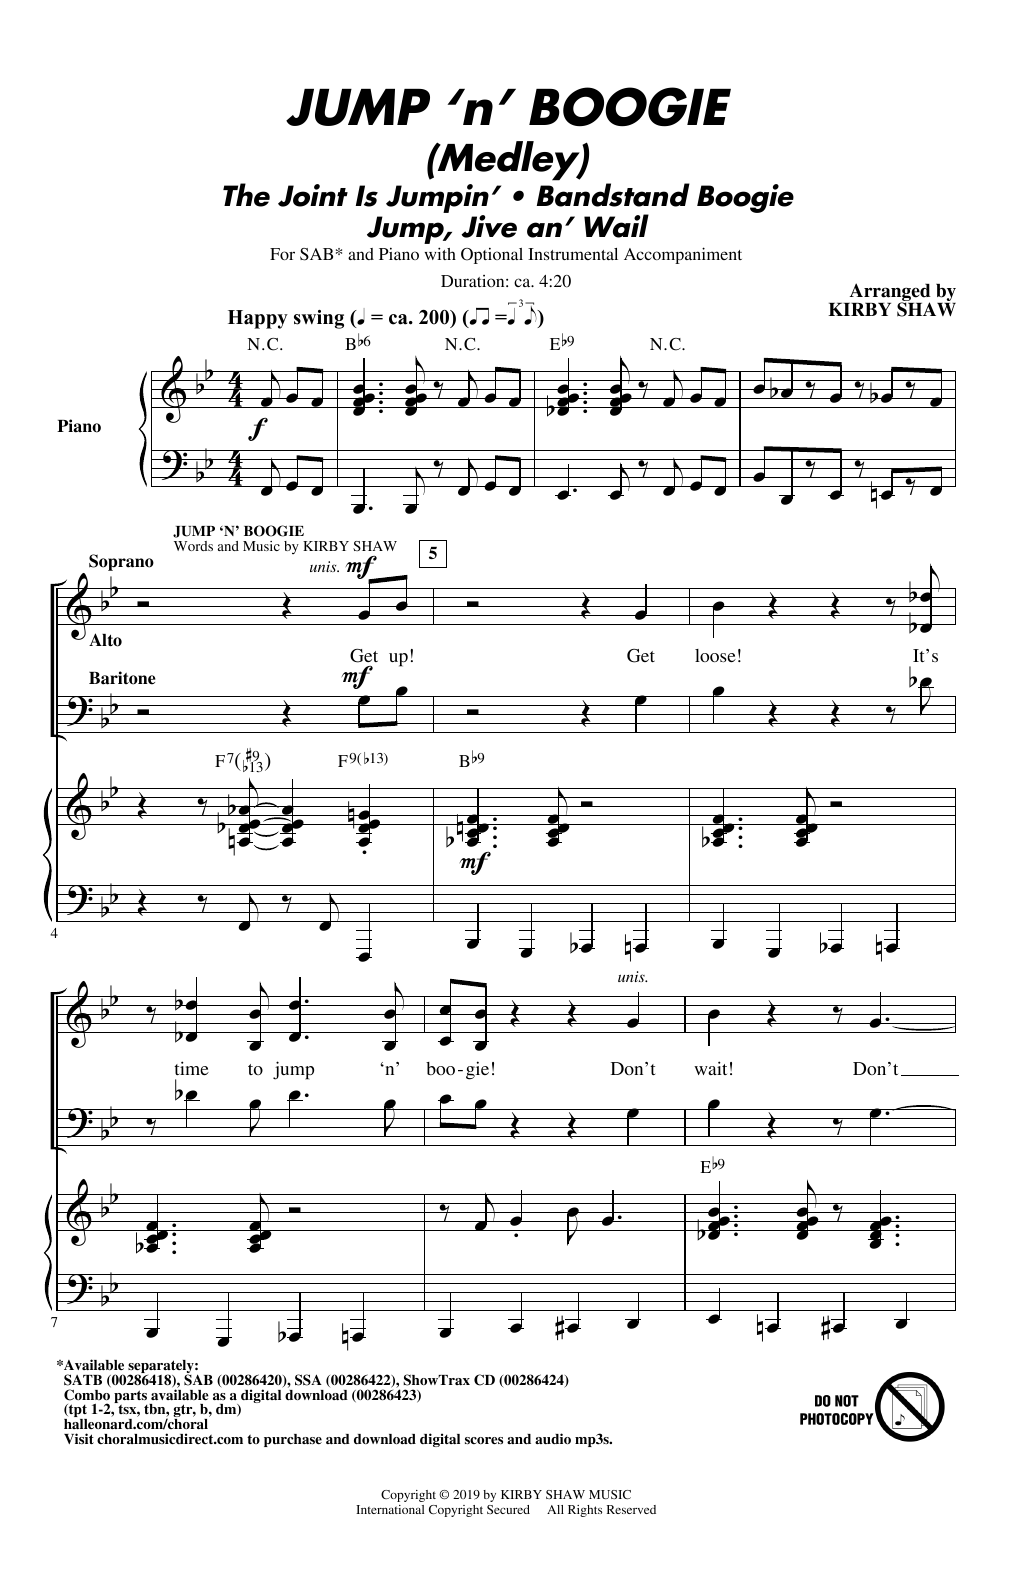 Kirby Shaw Jump 'n' Boogie (Medley) Sheet Music Notes & Chords for SAB Choir - Download or Print PDF